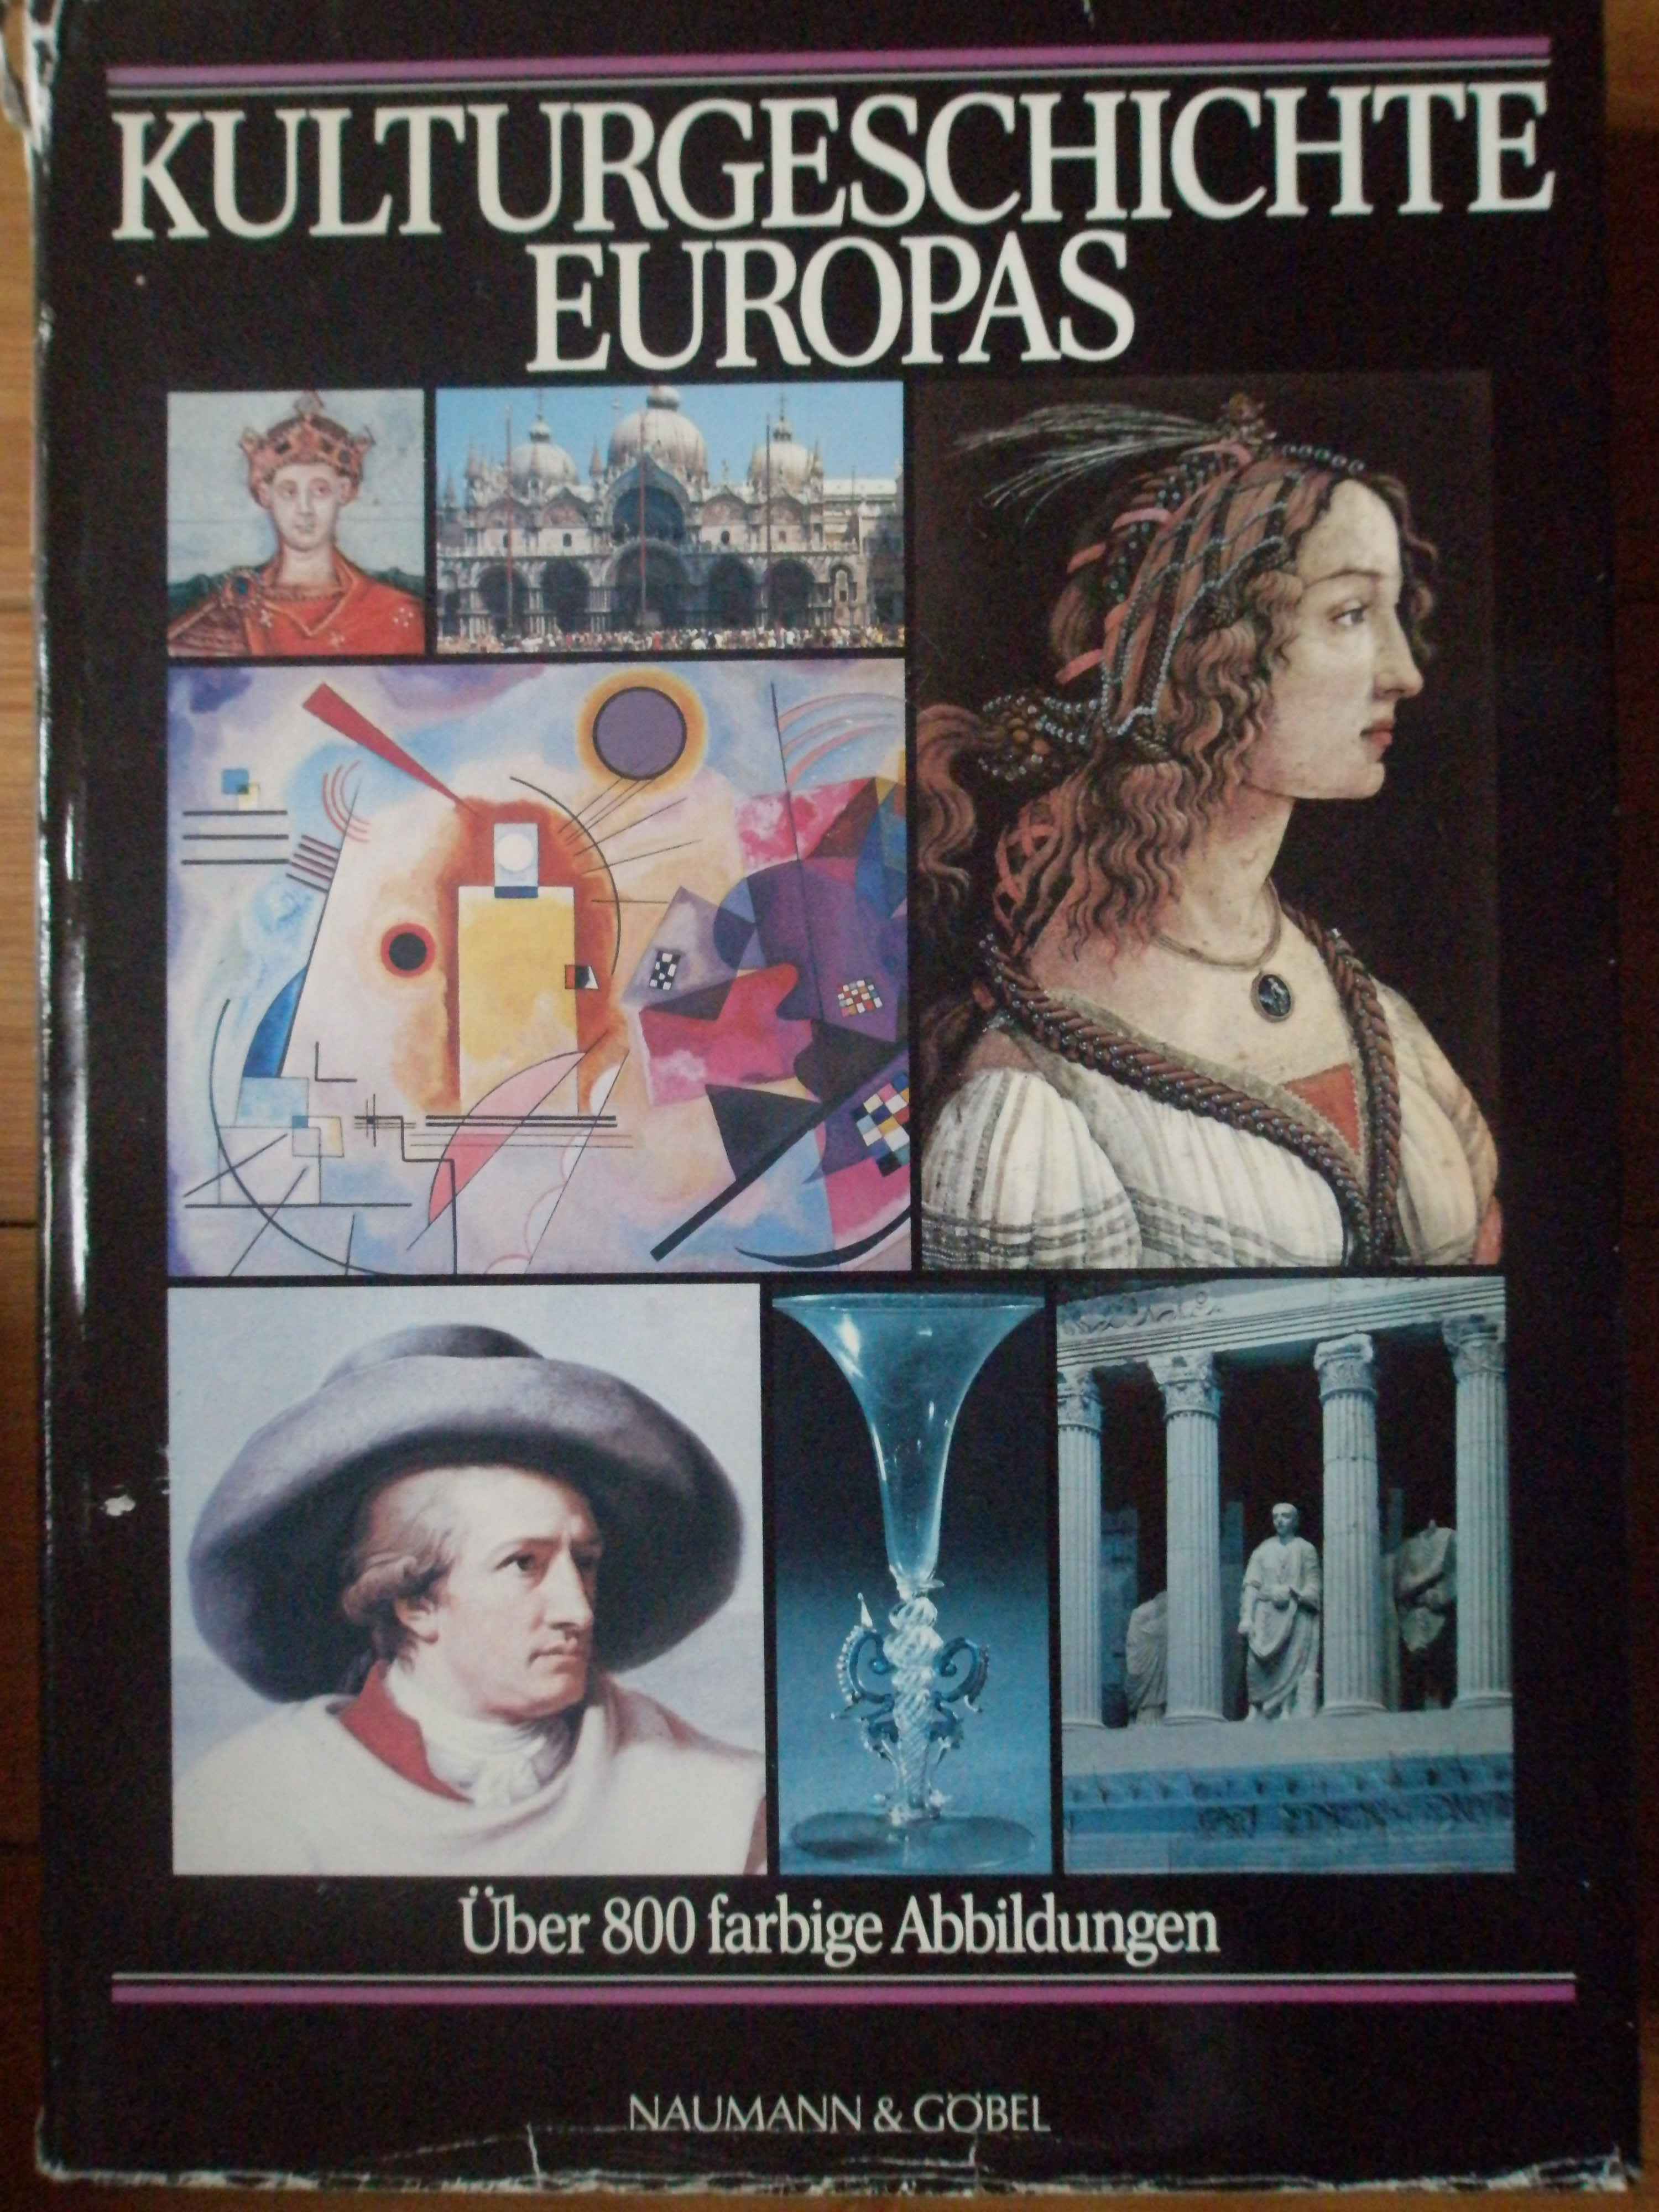 kulturgeschichte europas                                                                             colectiv                                                                                            